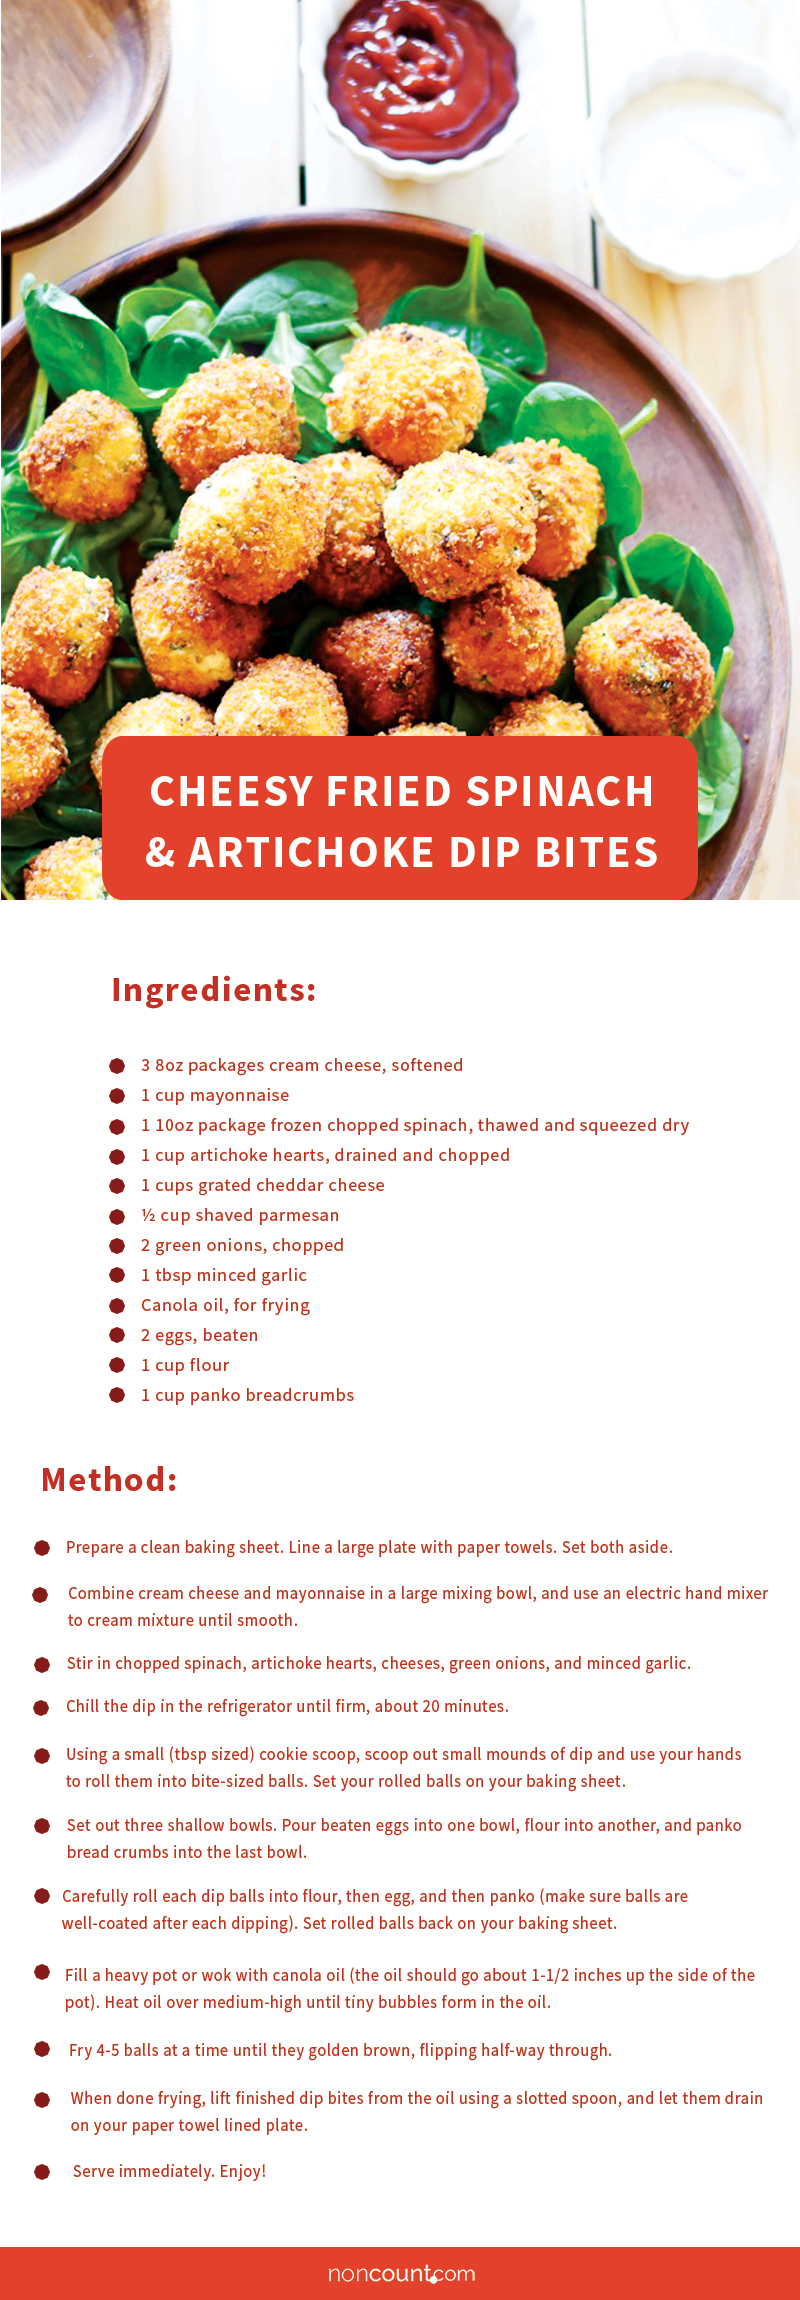 Cheesy Fried Spinach & Artichoke Dip Bites